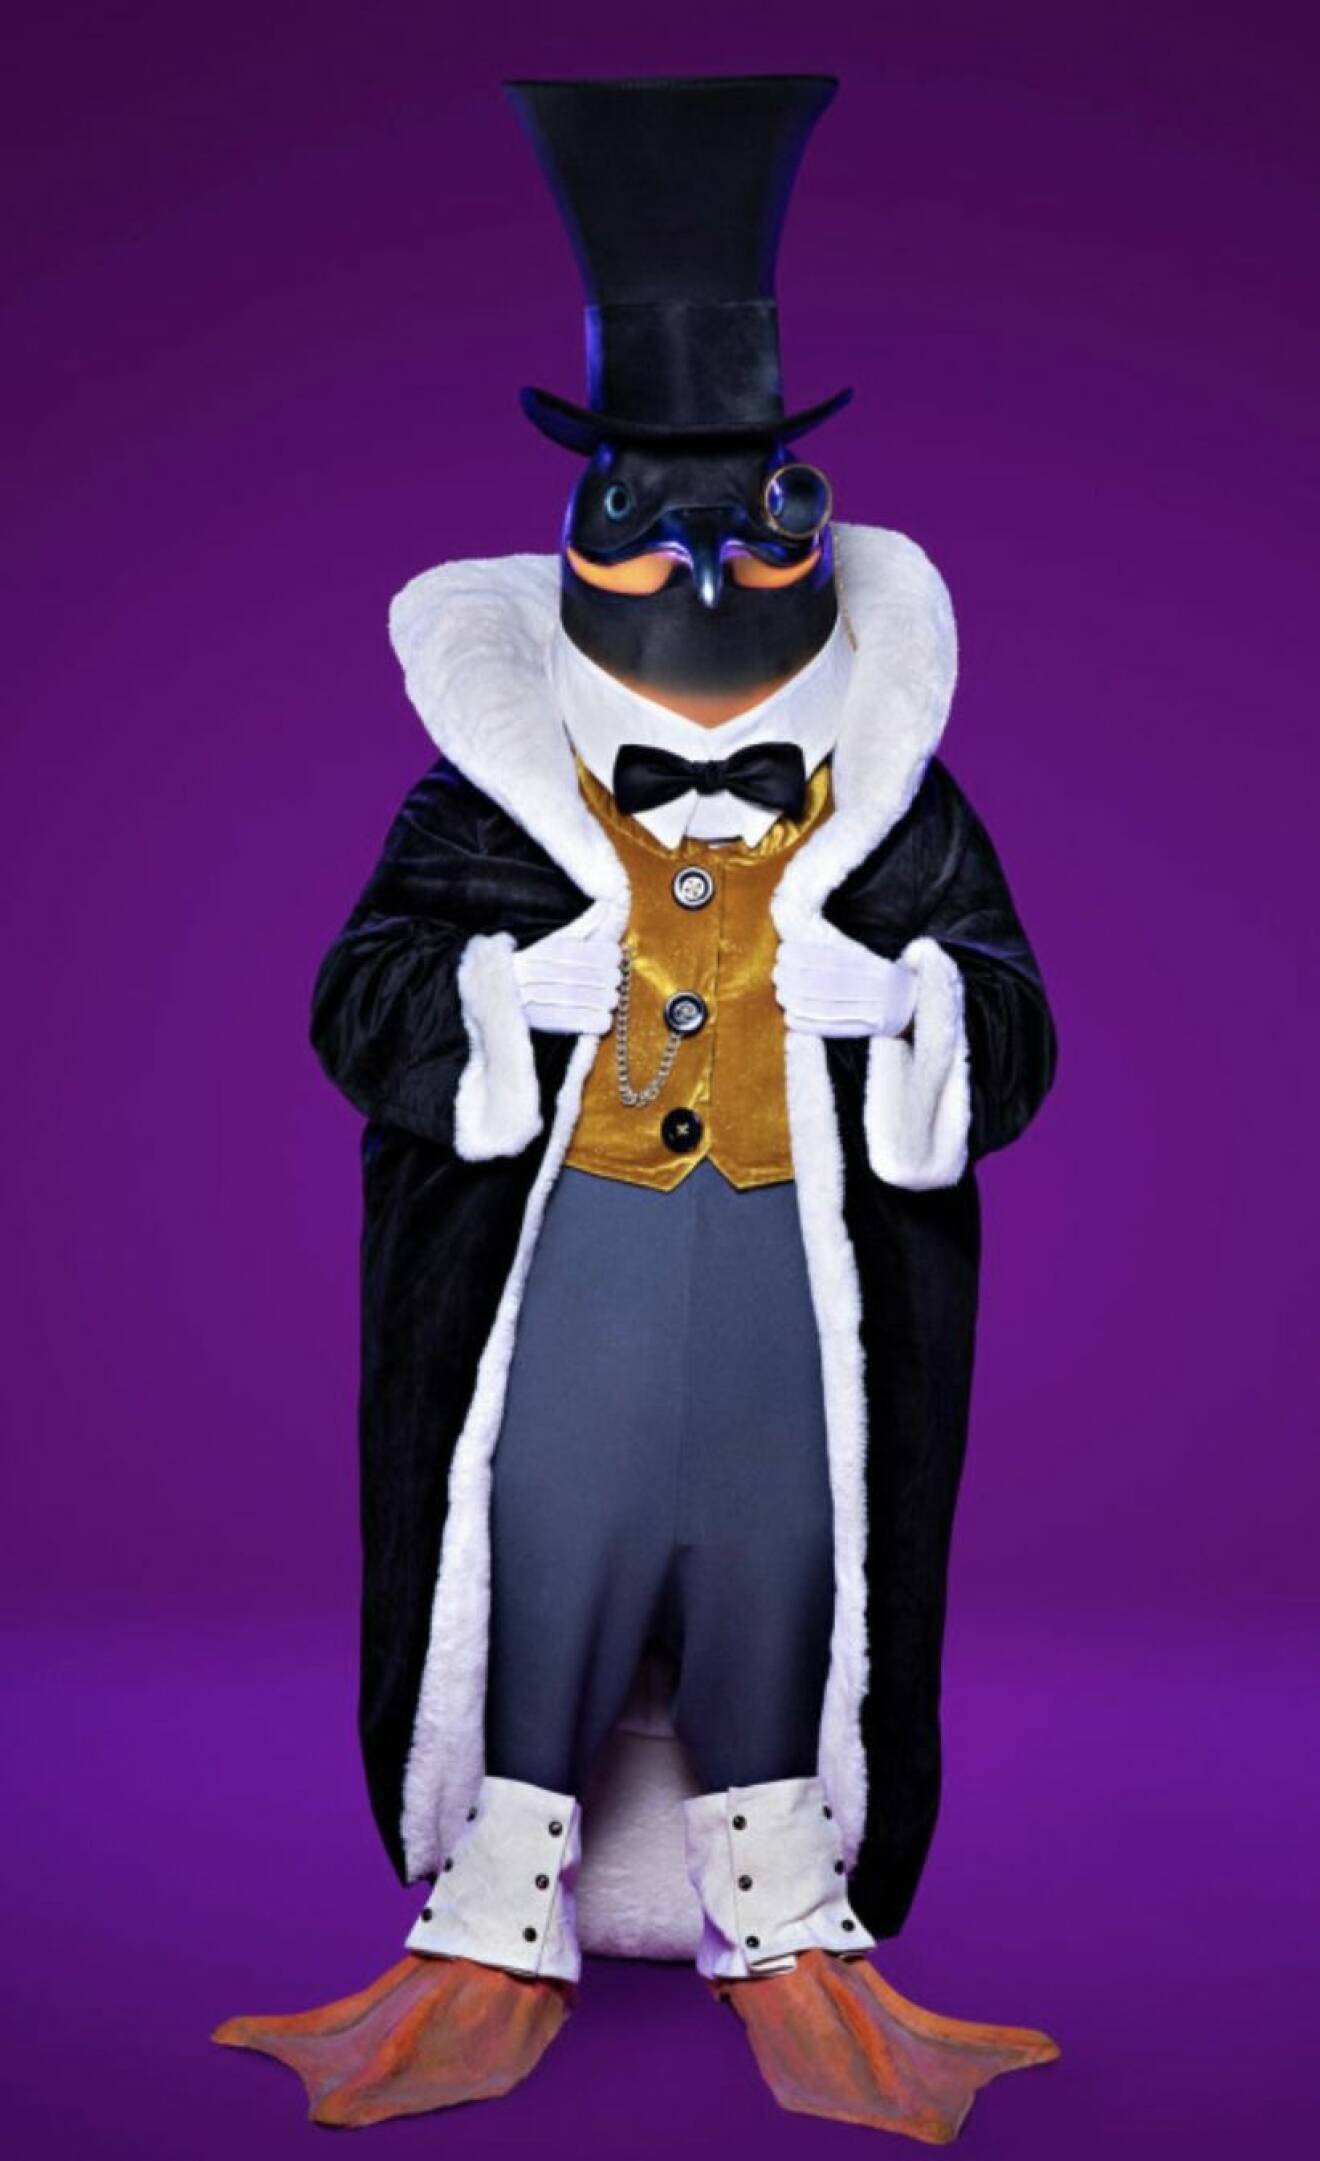 Pingvinen i Masked singer Sverige